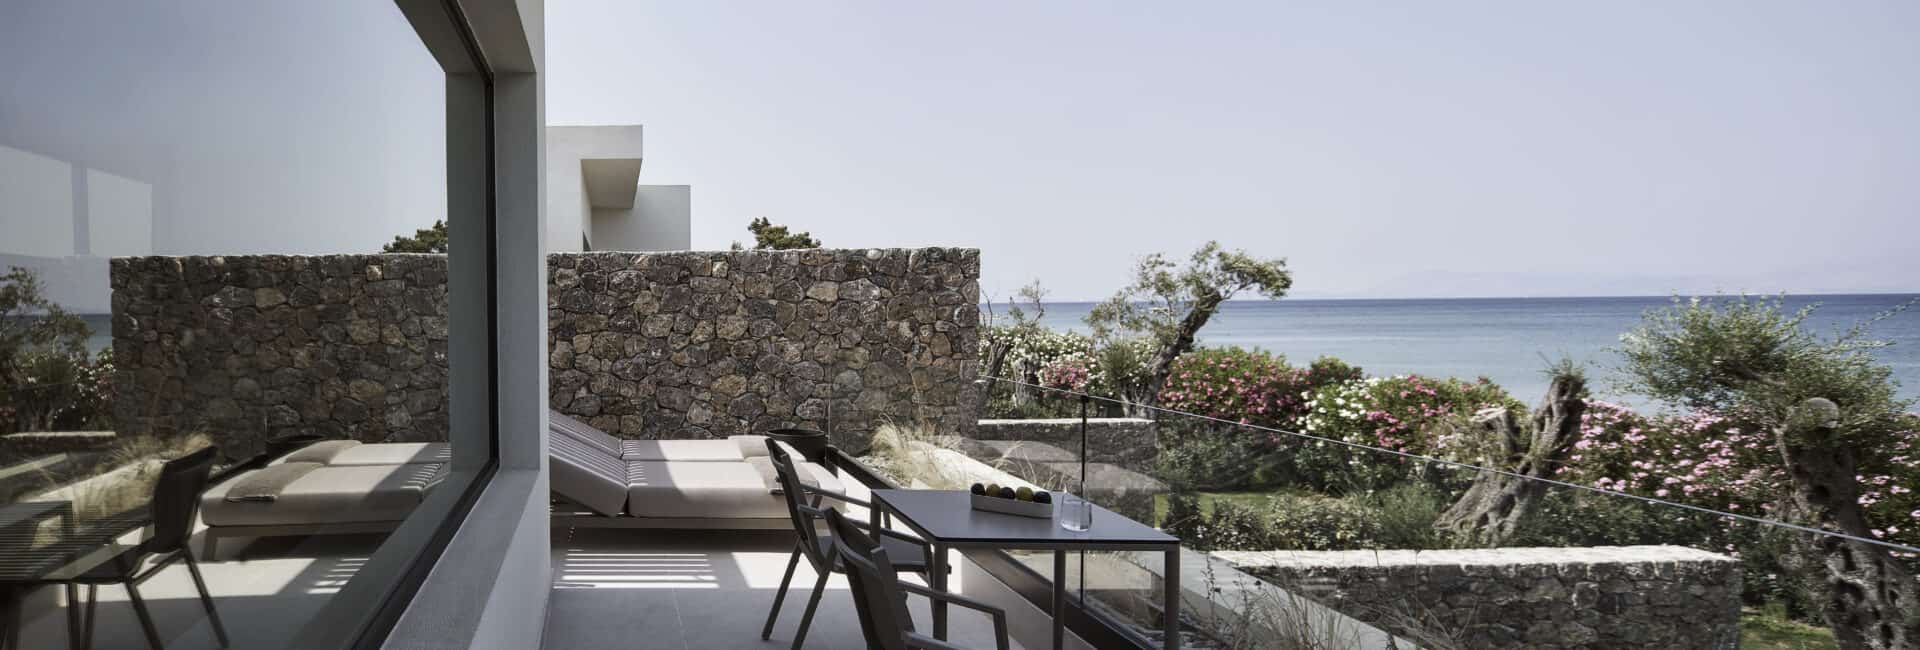 The Olivar Suites - Riviera balcony